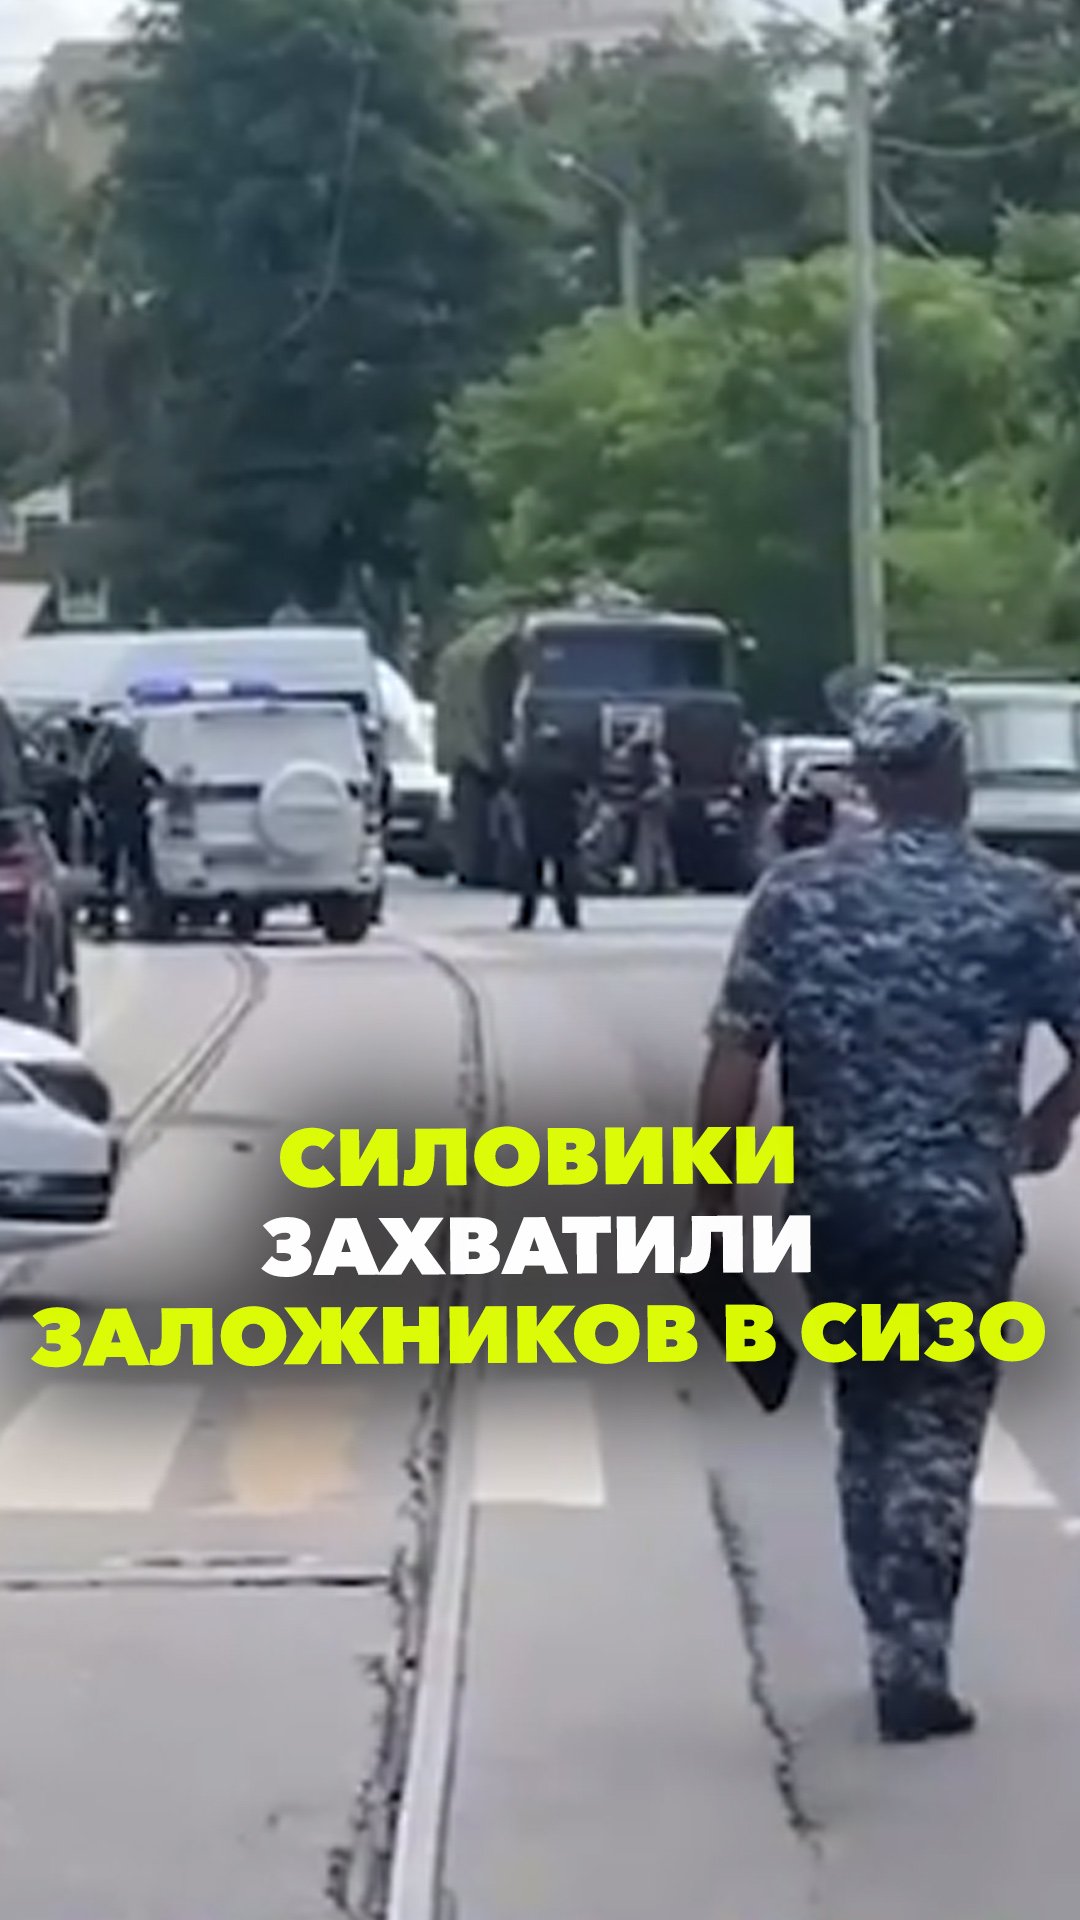 Силовики оцепили ростовское СИЗО, где взяли сотрудников в заложники. Захватчики сидят по «террористи